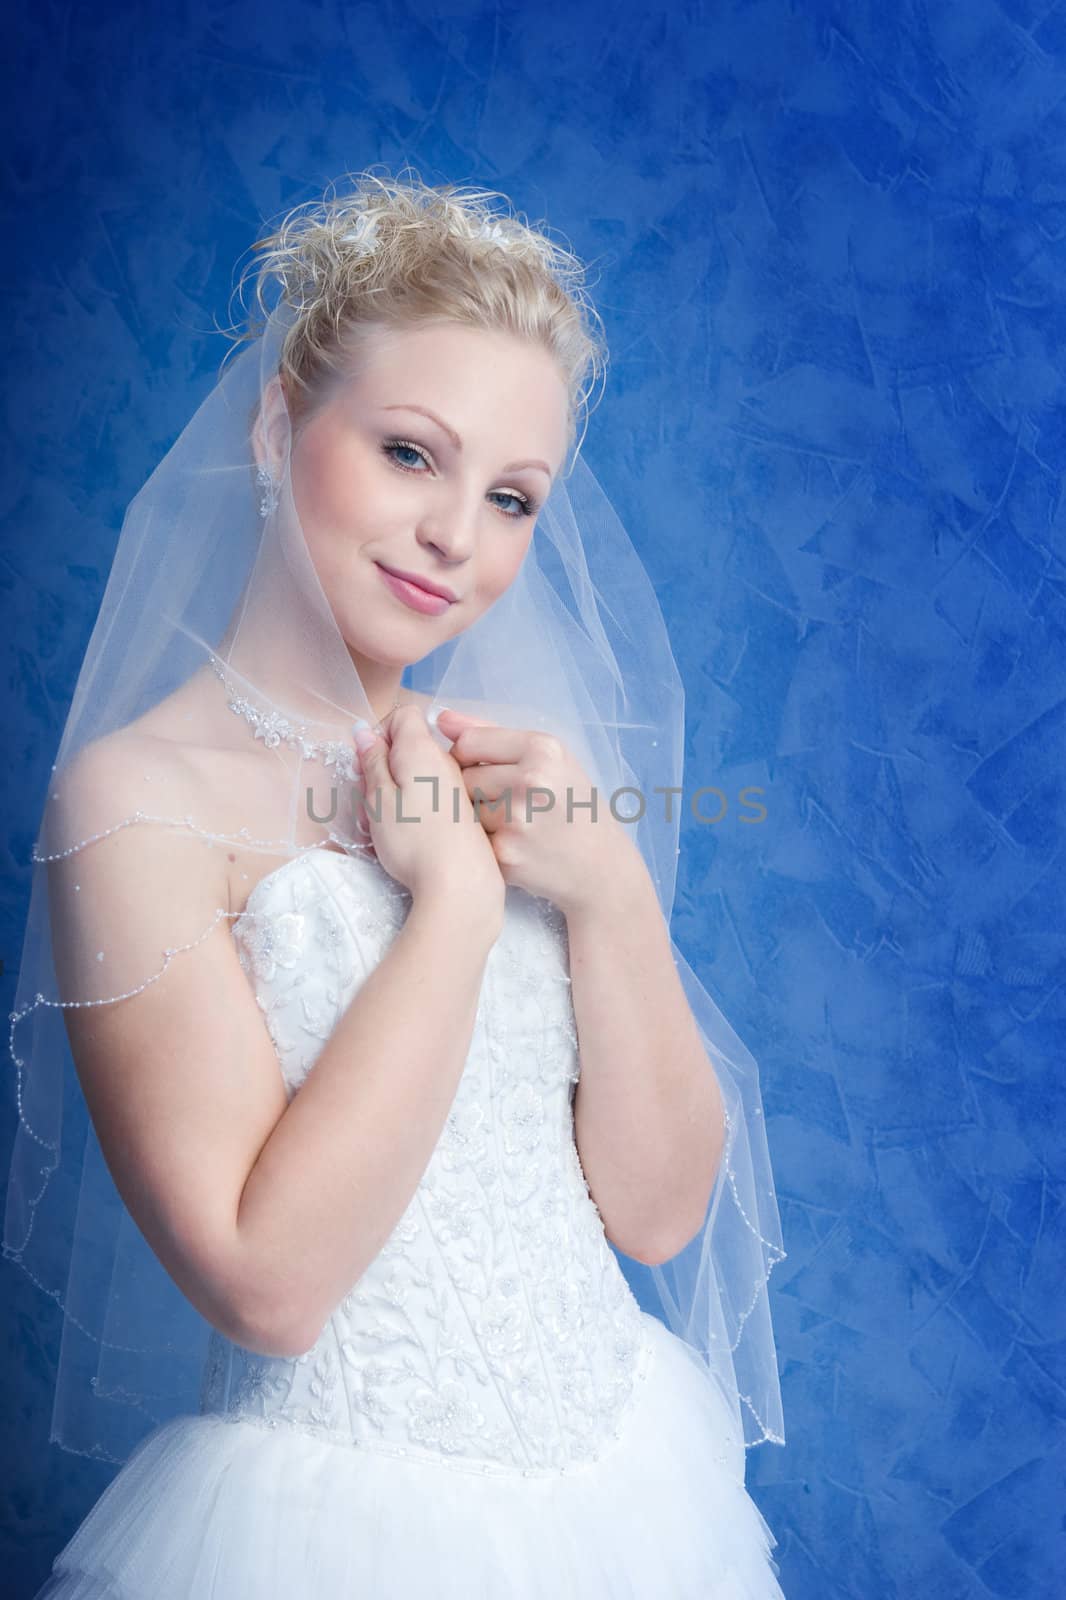 Portrait of the bride by vsurkov